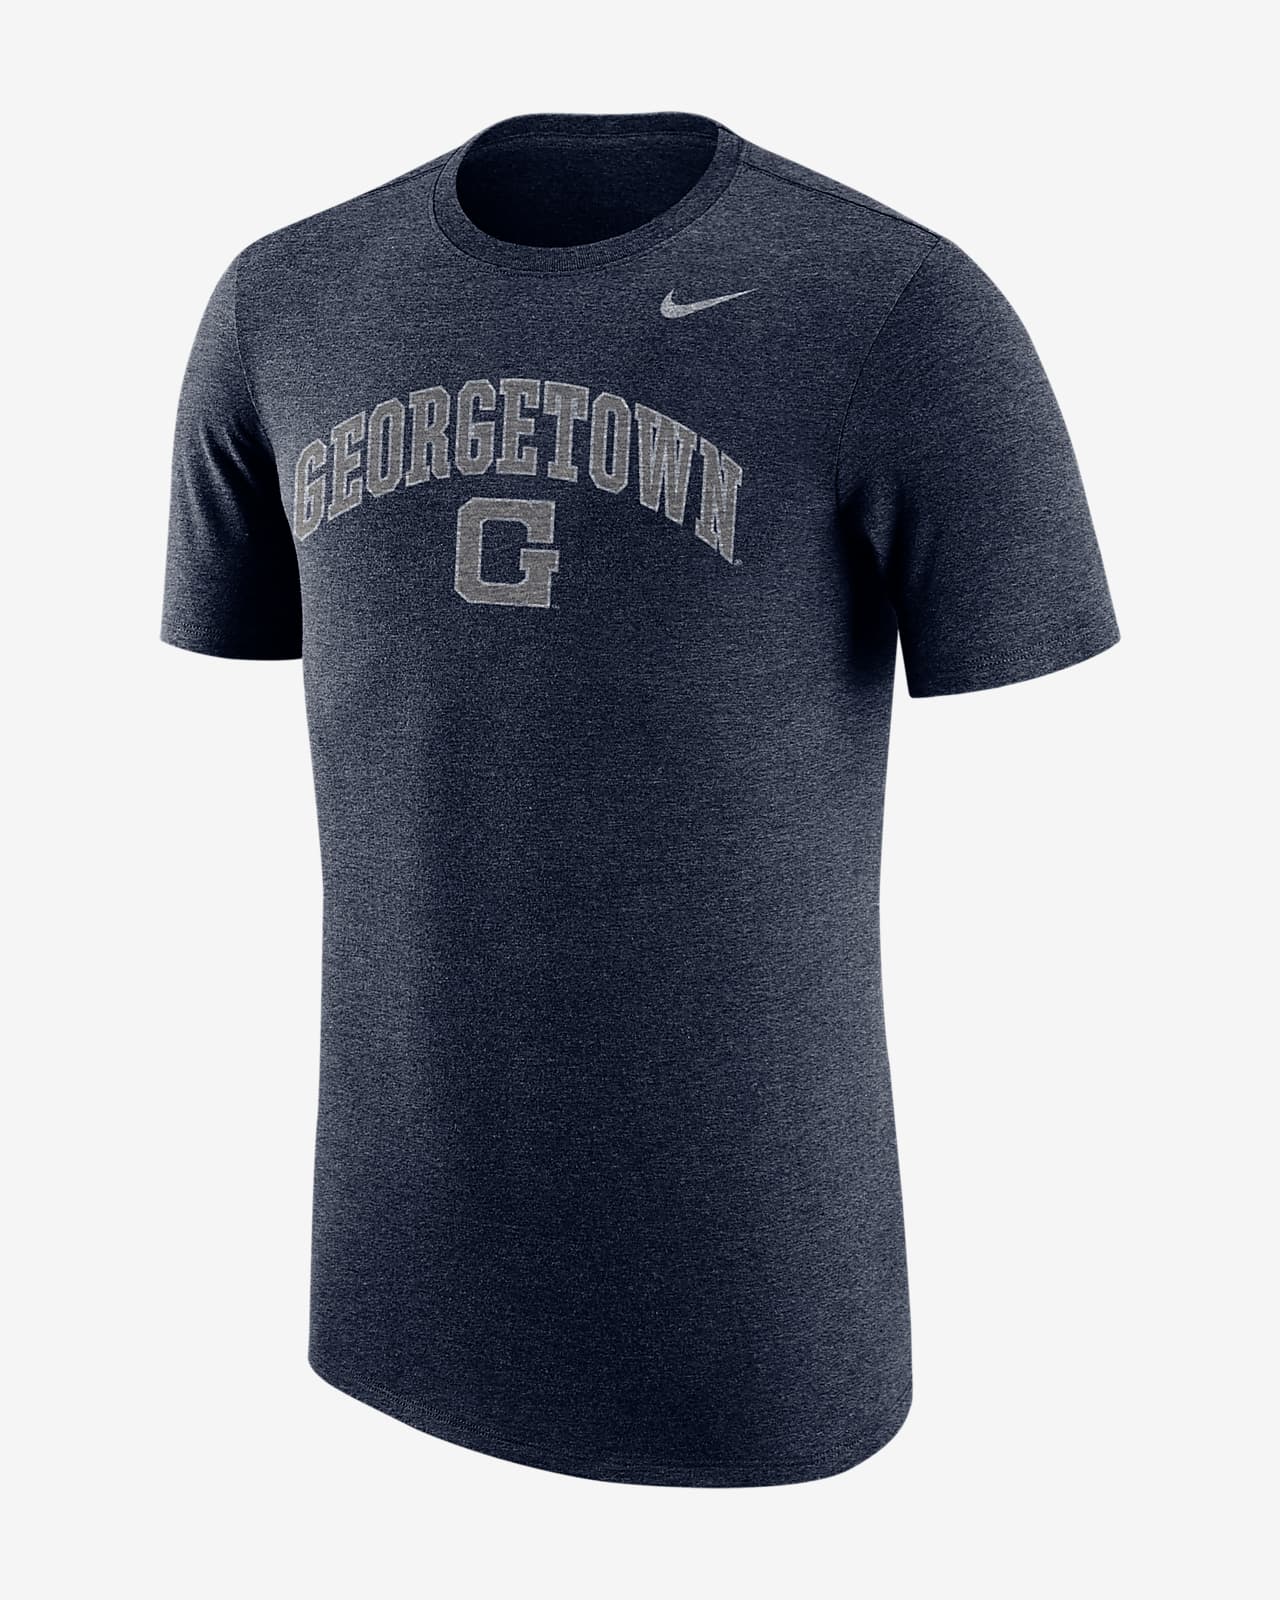 Nike College (Georgetown) Men's T-Shirt. Nike.com